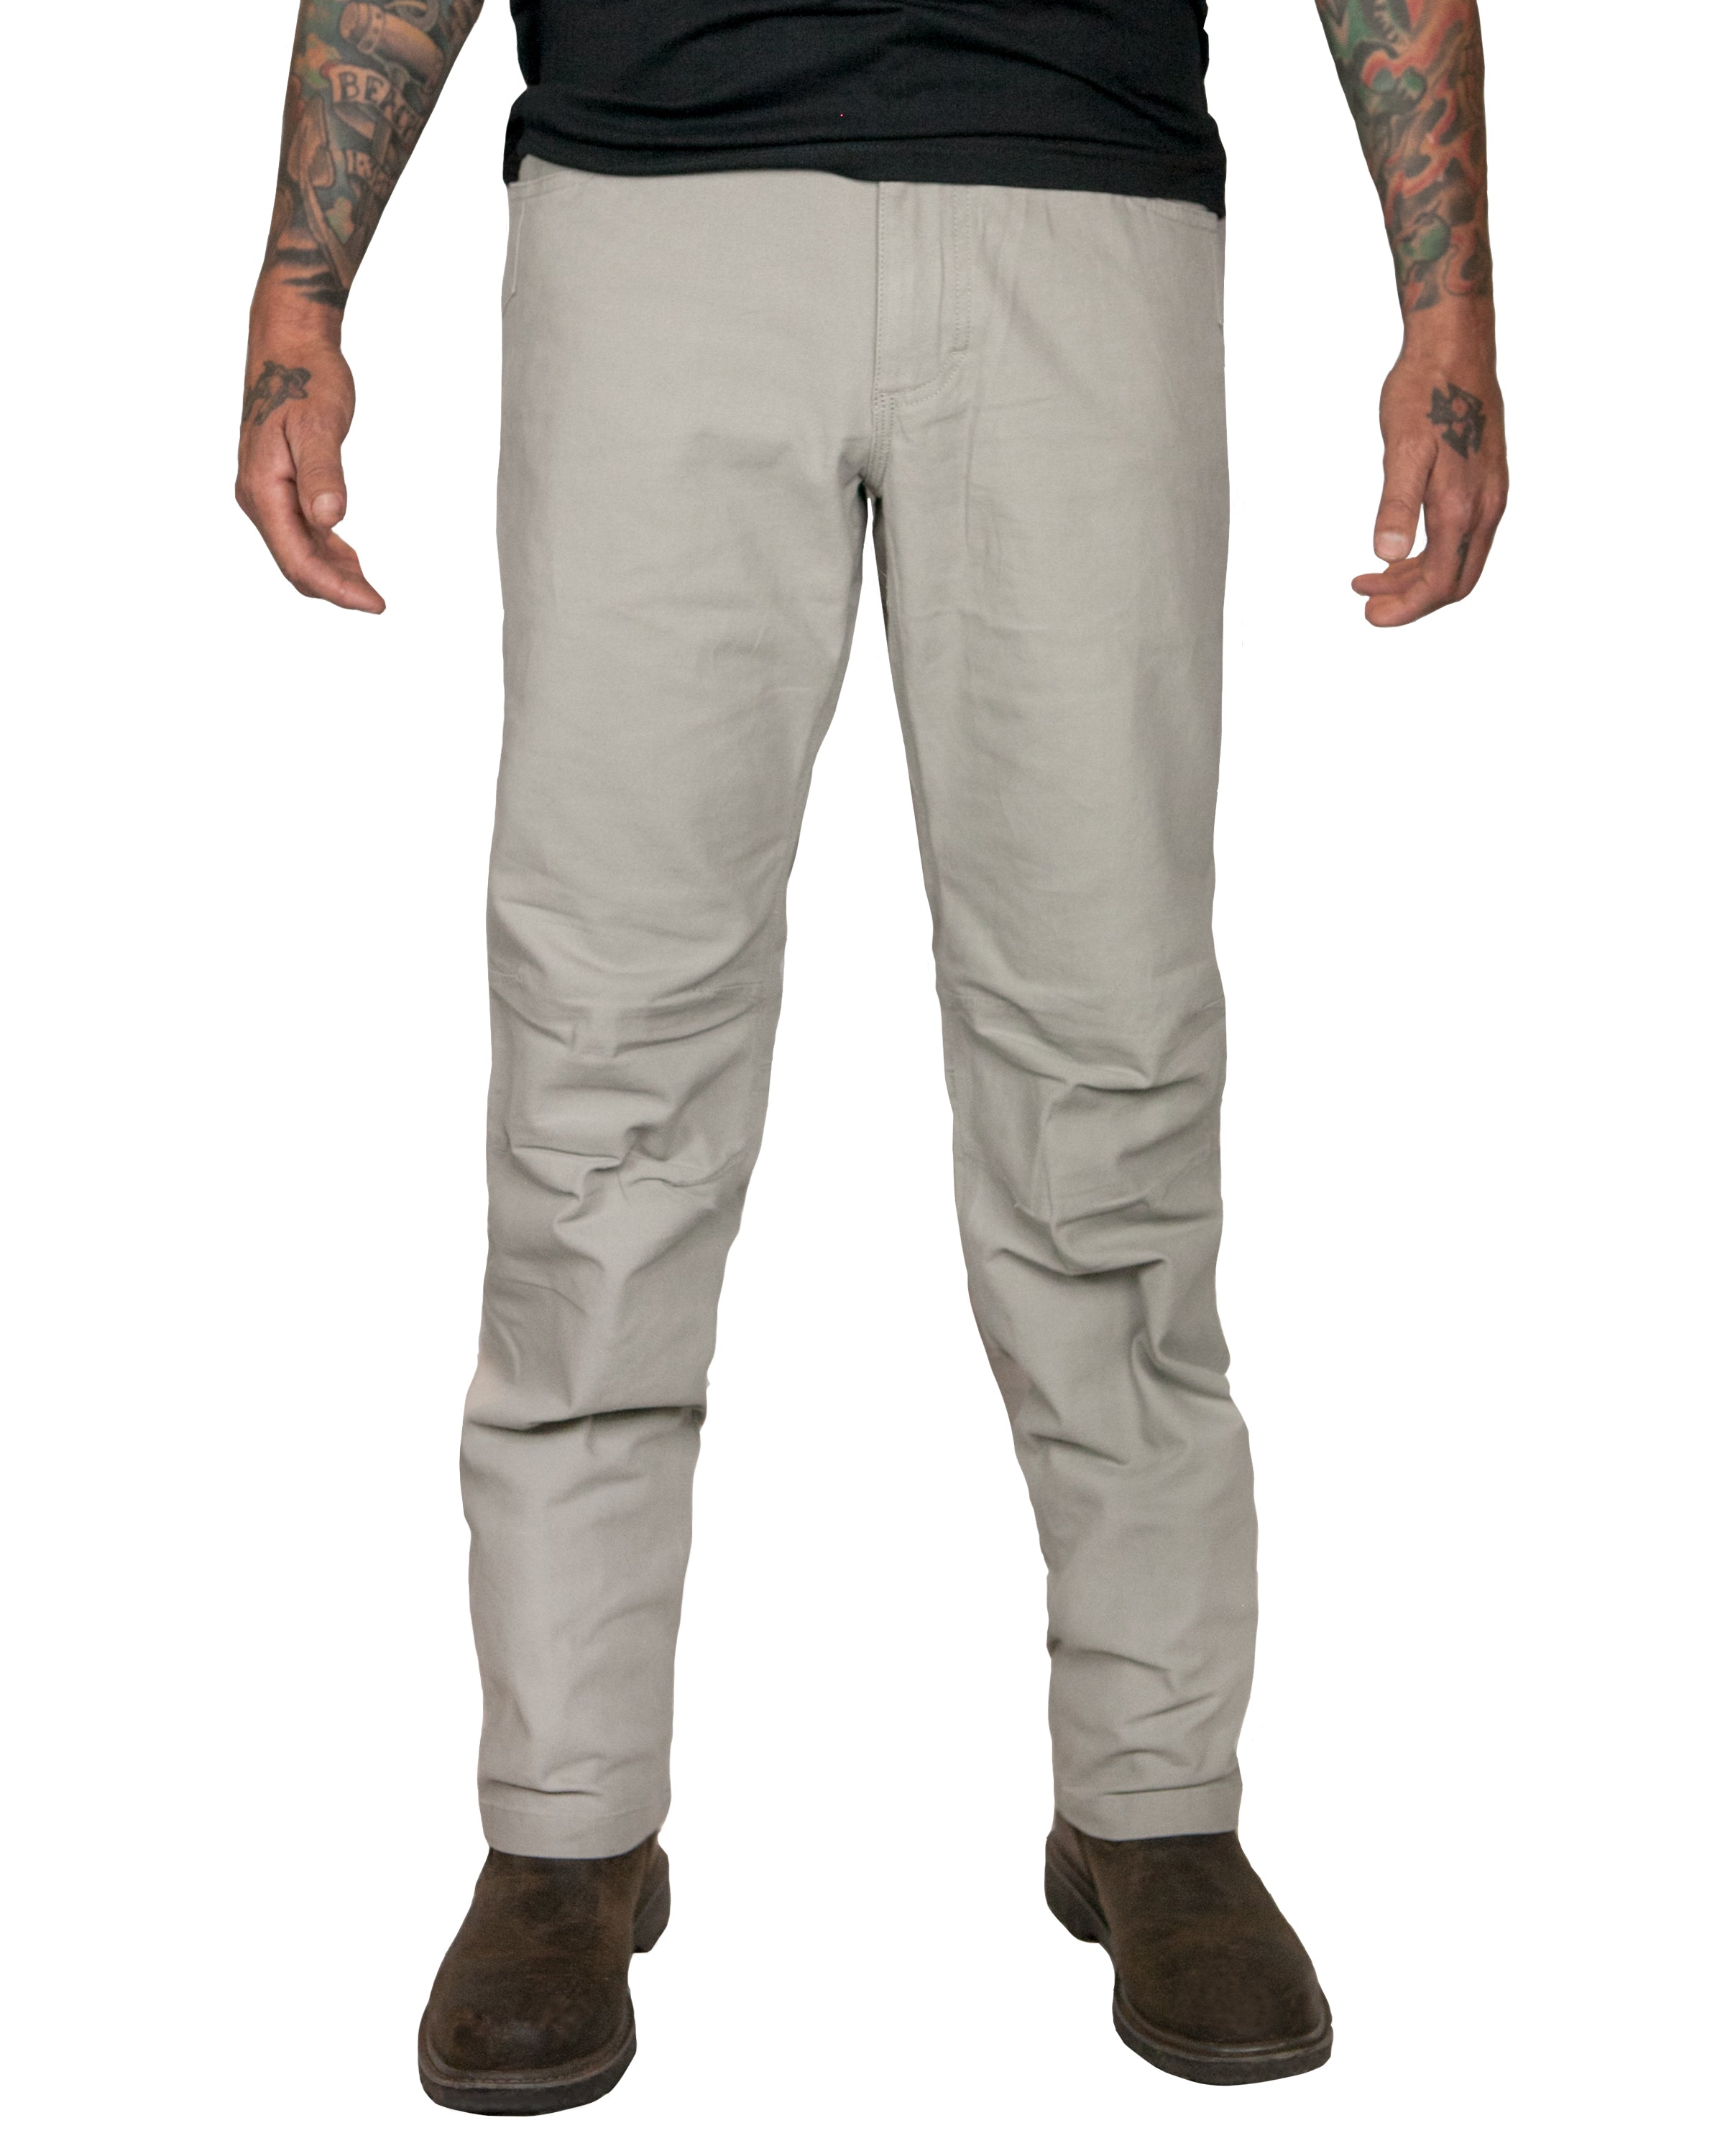 Trailblazer 5.1 Pants - Flint Grey - Standard Fit